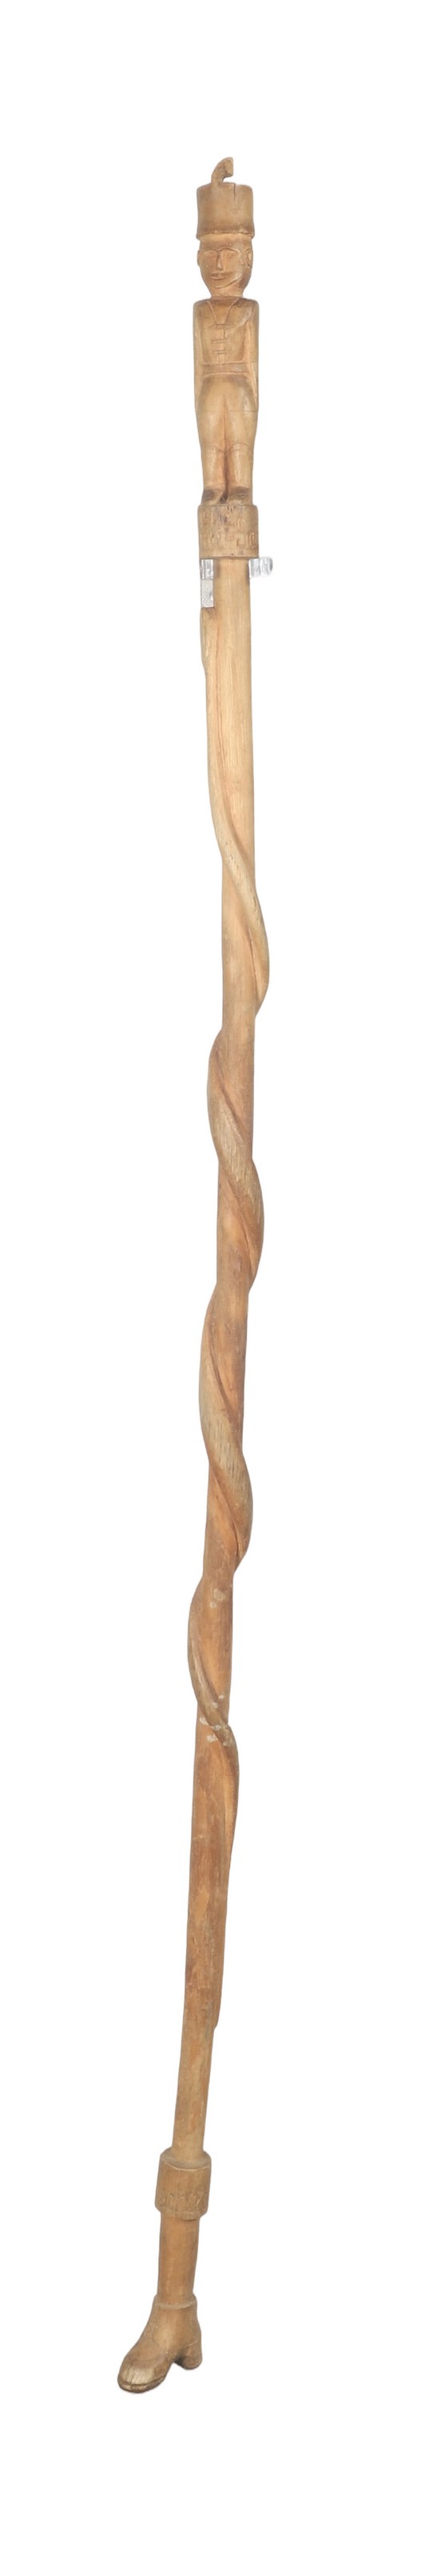 Carved wood figural walking stick  2e1197